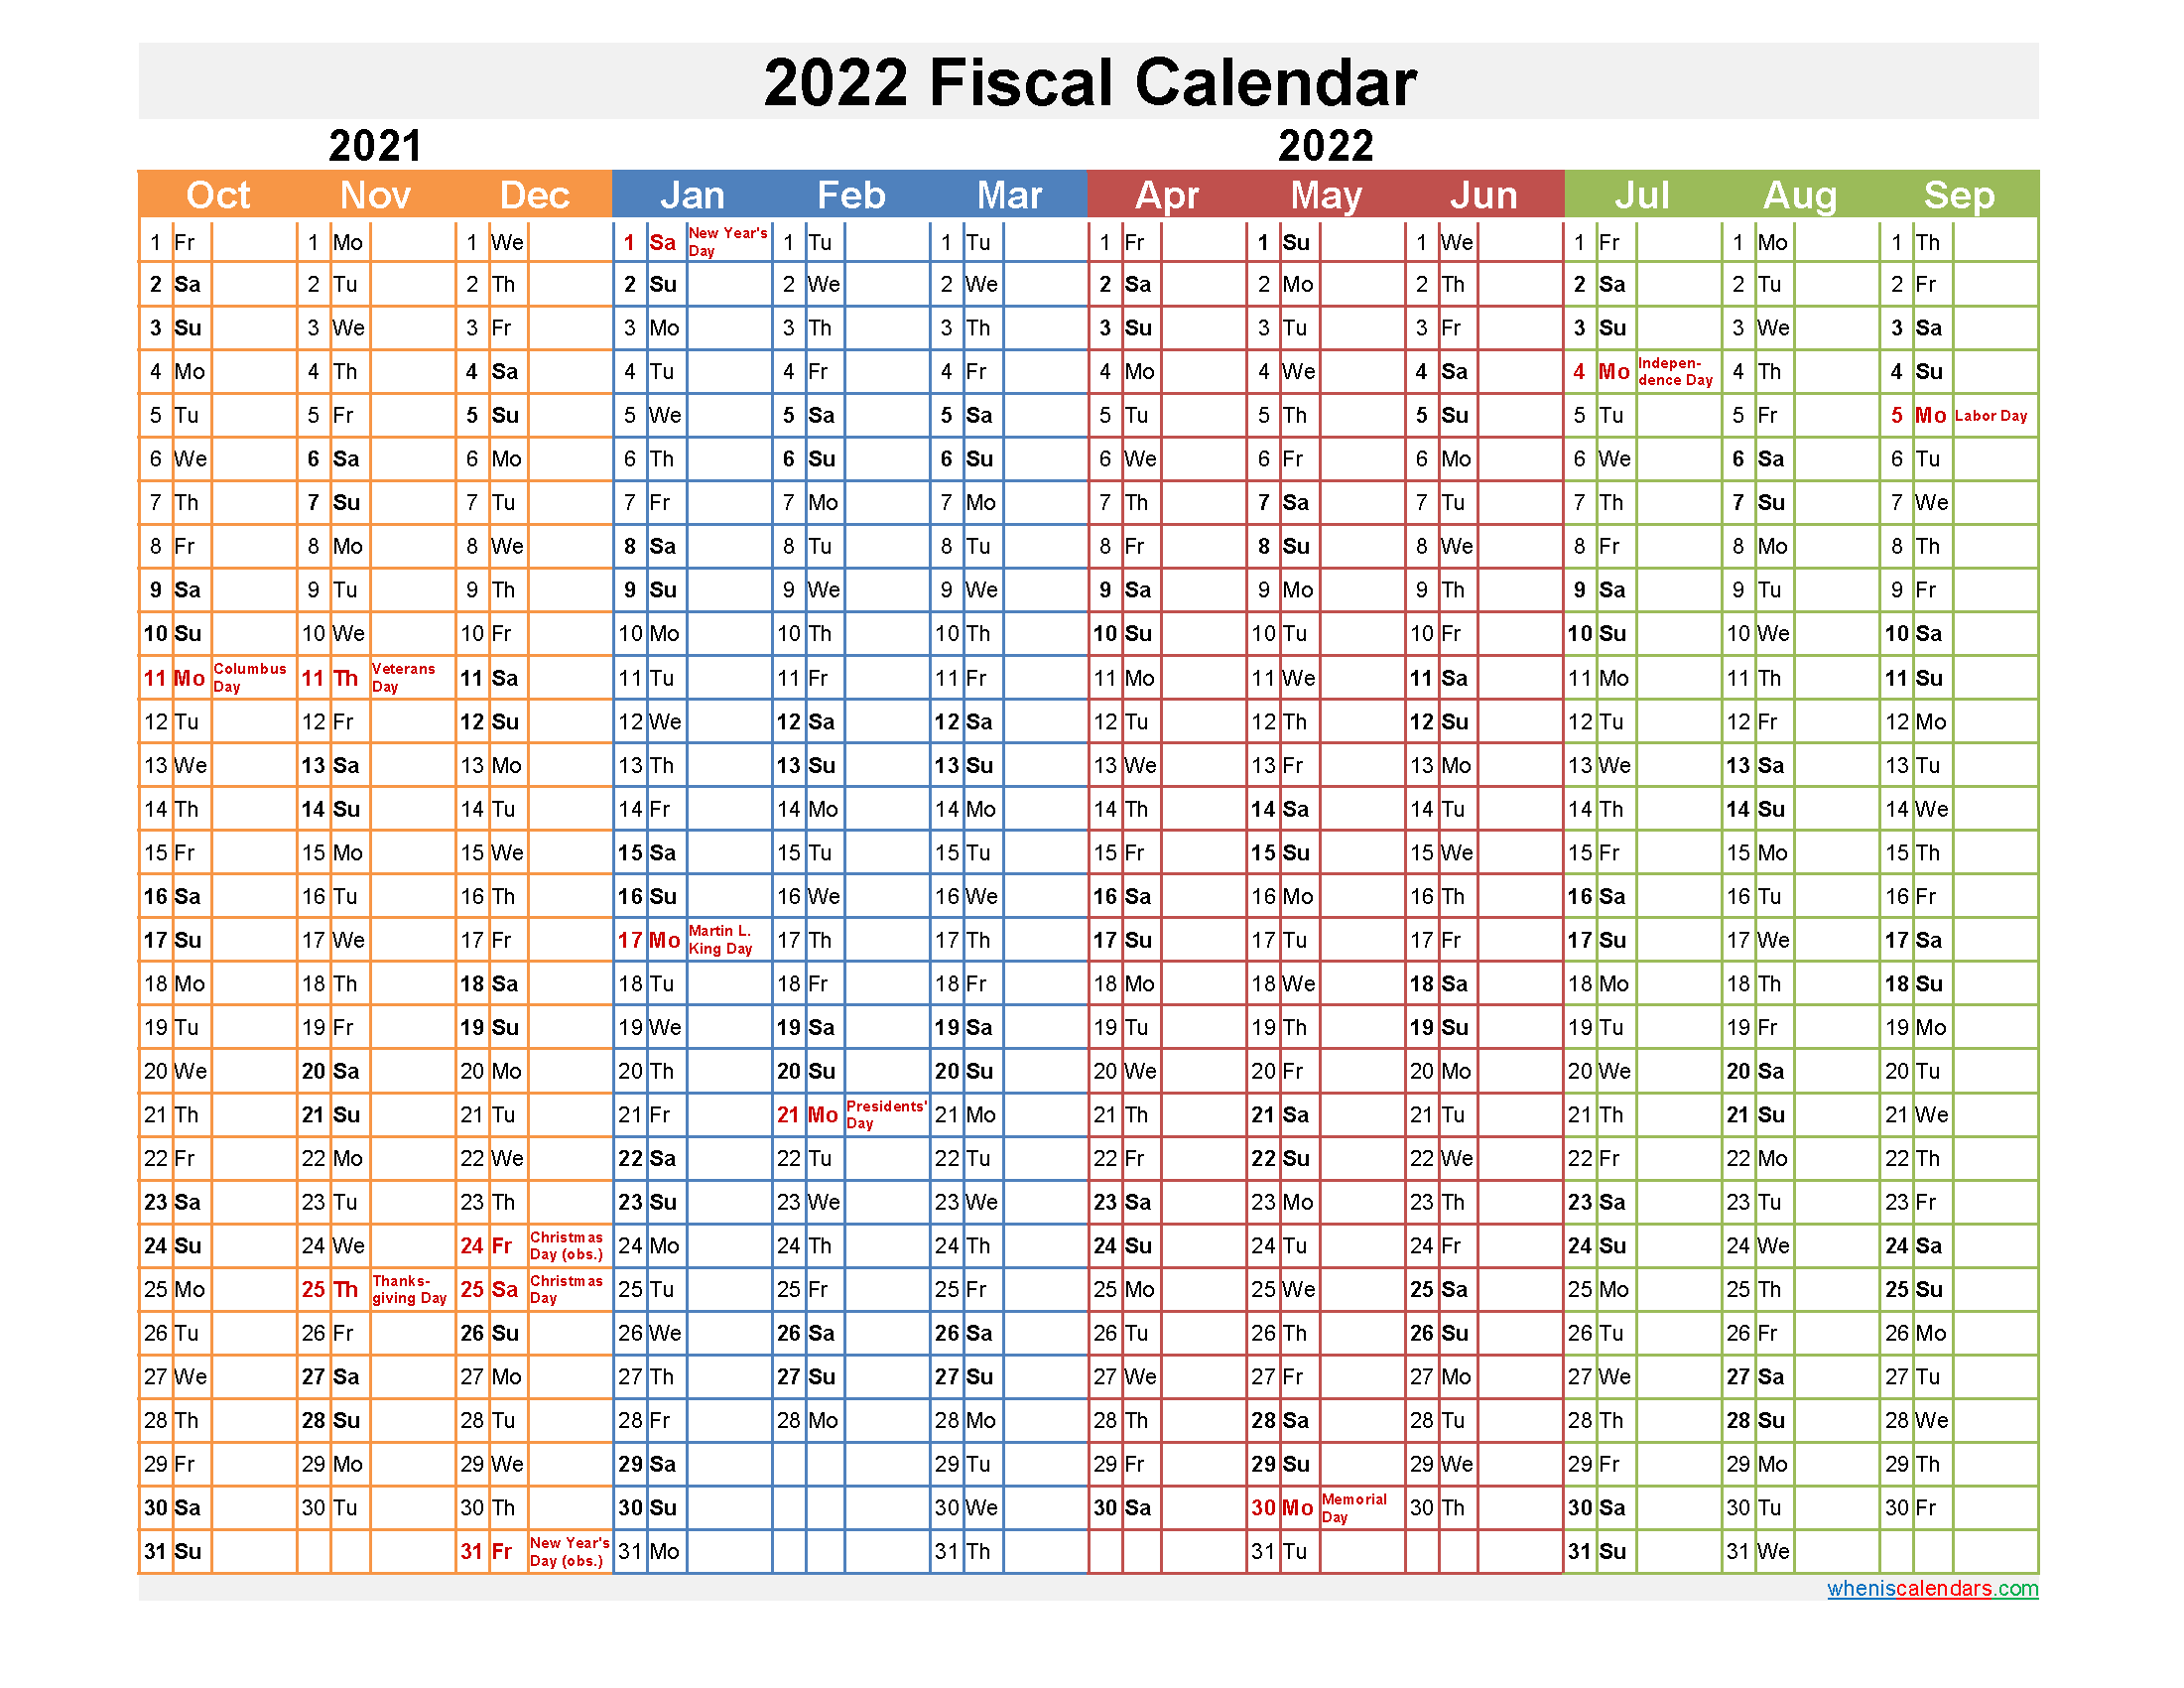 Federal Fiscal Year 2022 Calendar